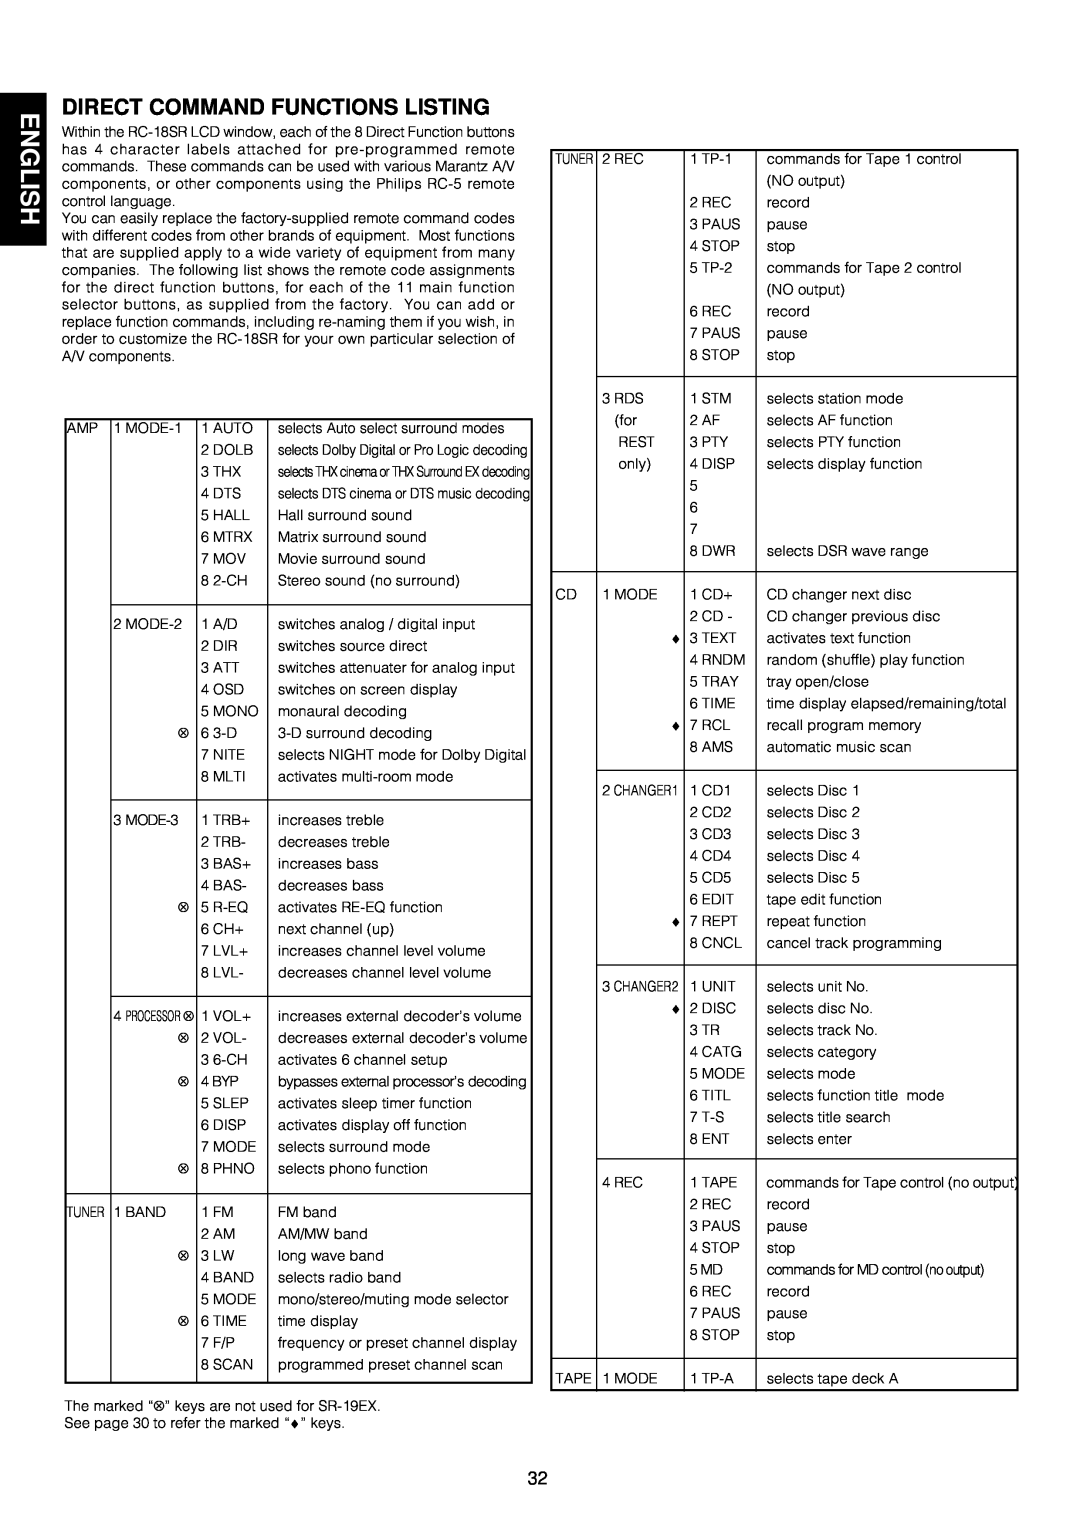 Marantz SR-18EX manual English, Direct Command Functions Listing 